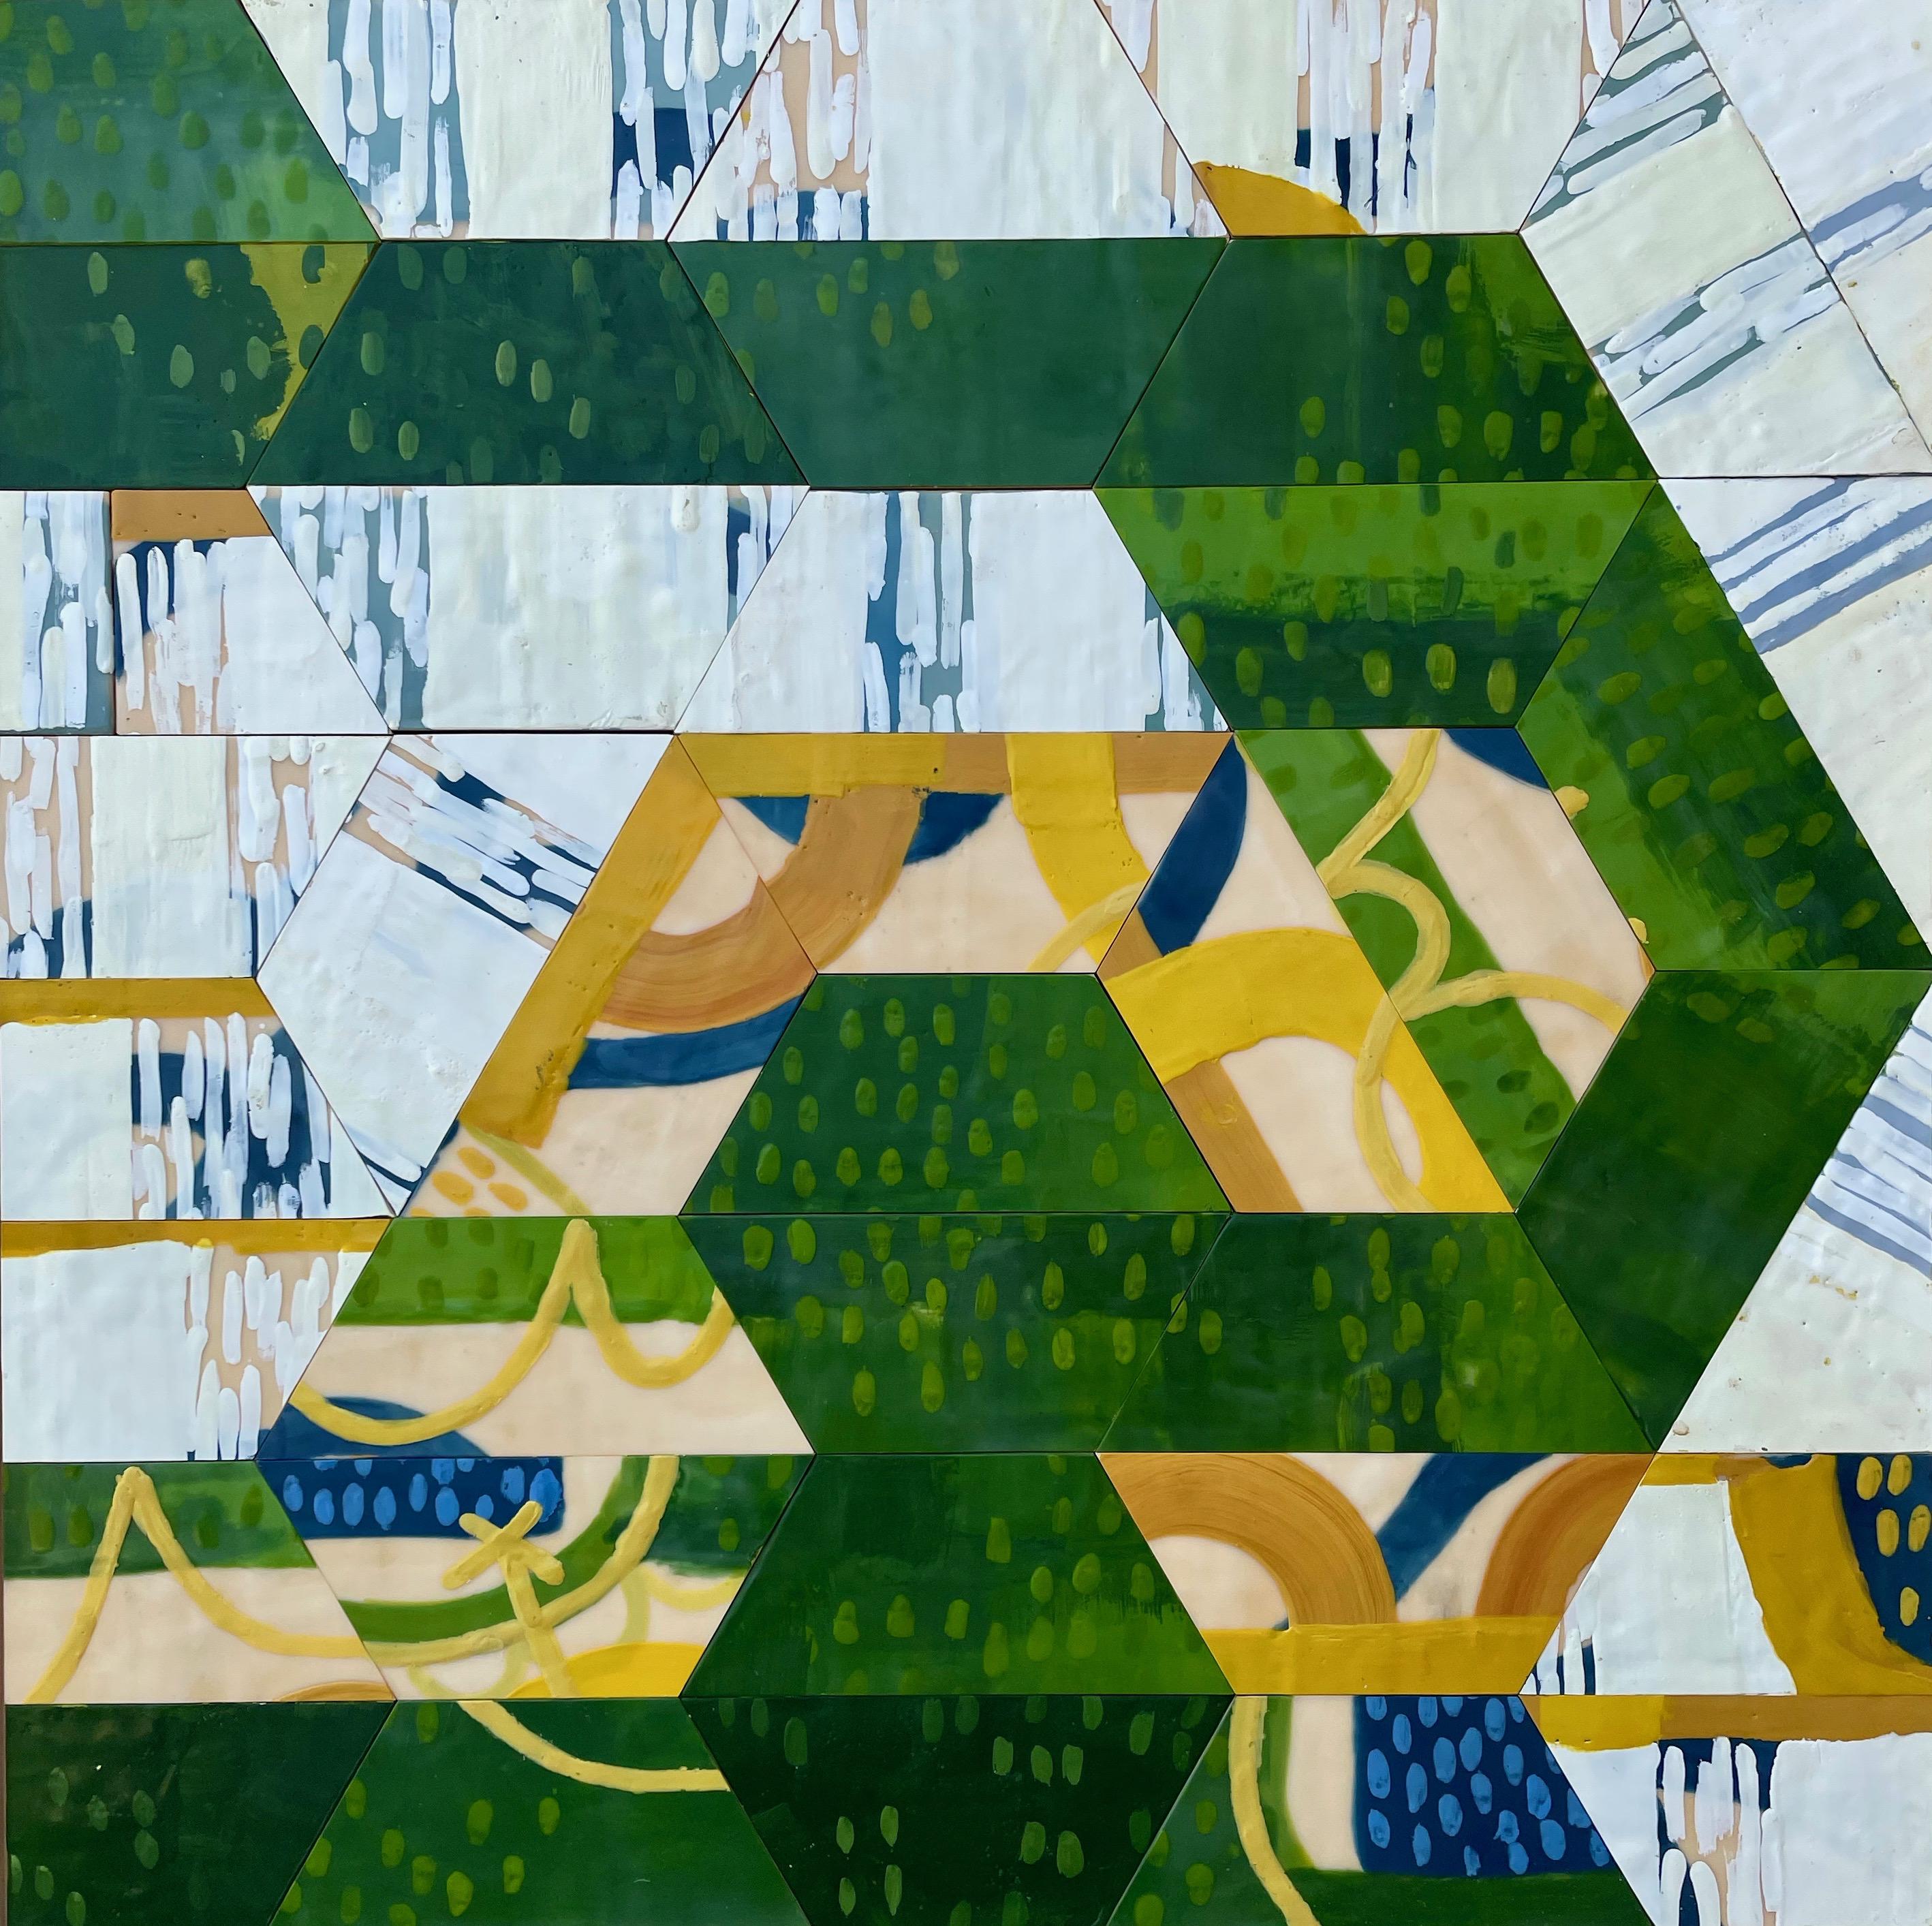 Cul-de-sac, grünes und blaues abstraktes Enkaustik-Gemälde auf Tafel